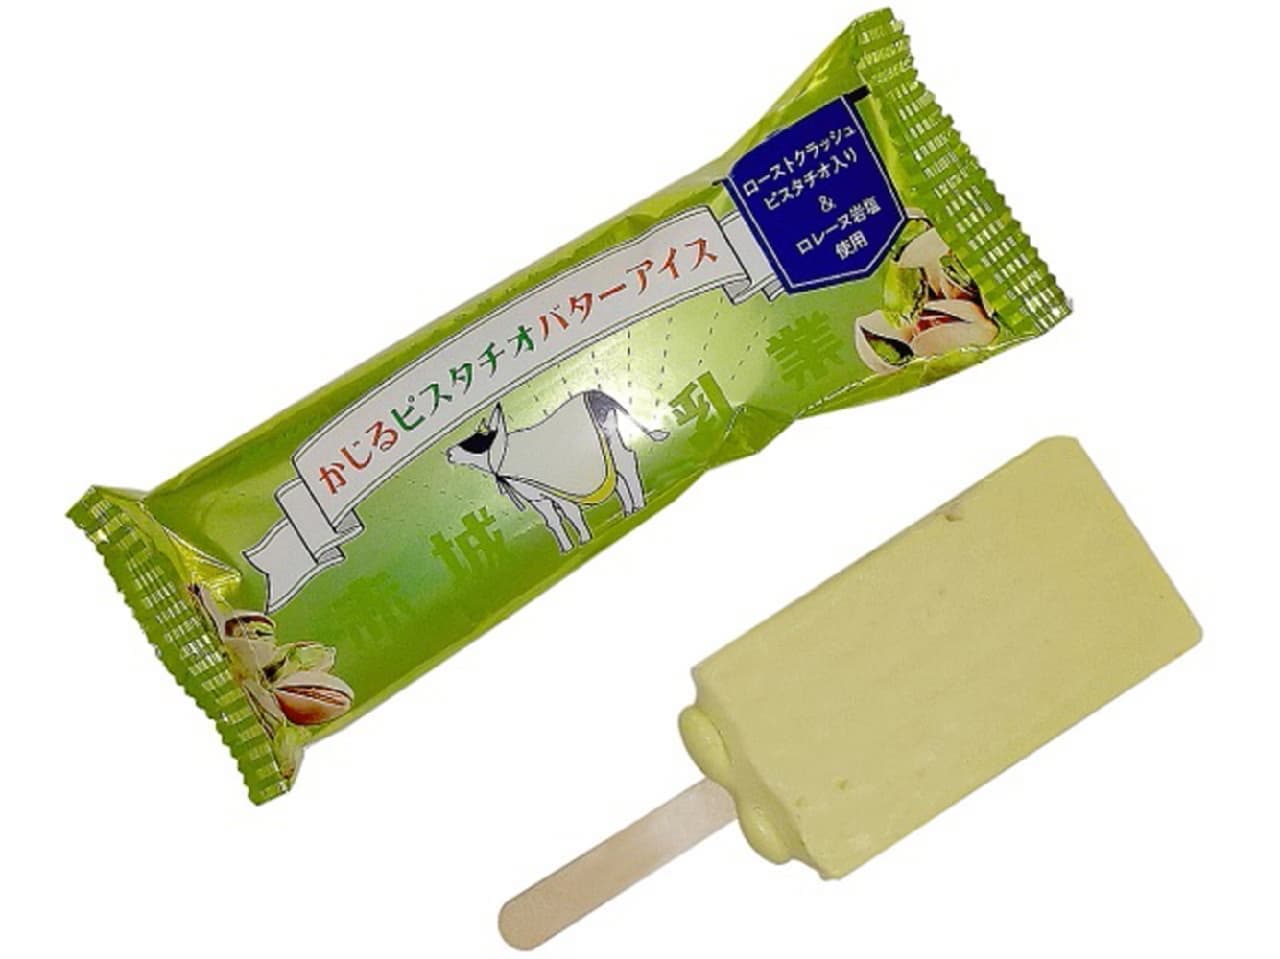 7-ELEVEN "Akagi Gnawing Pistachio Butter Ice Cream"